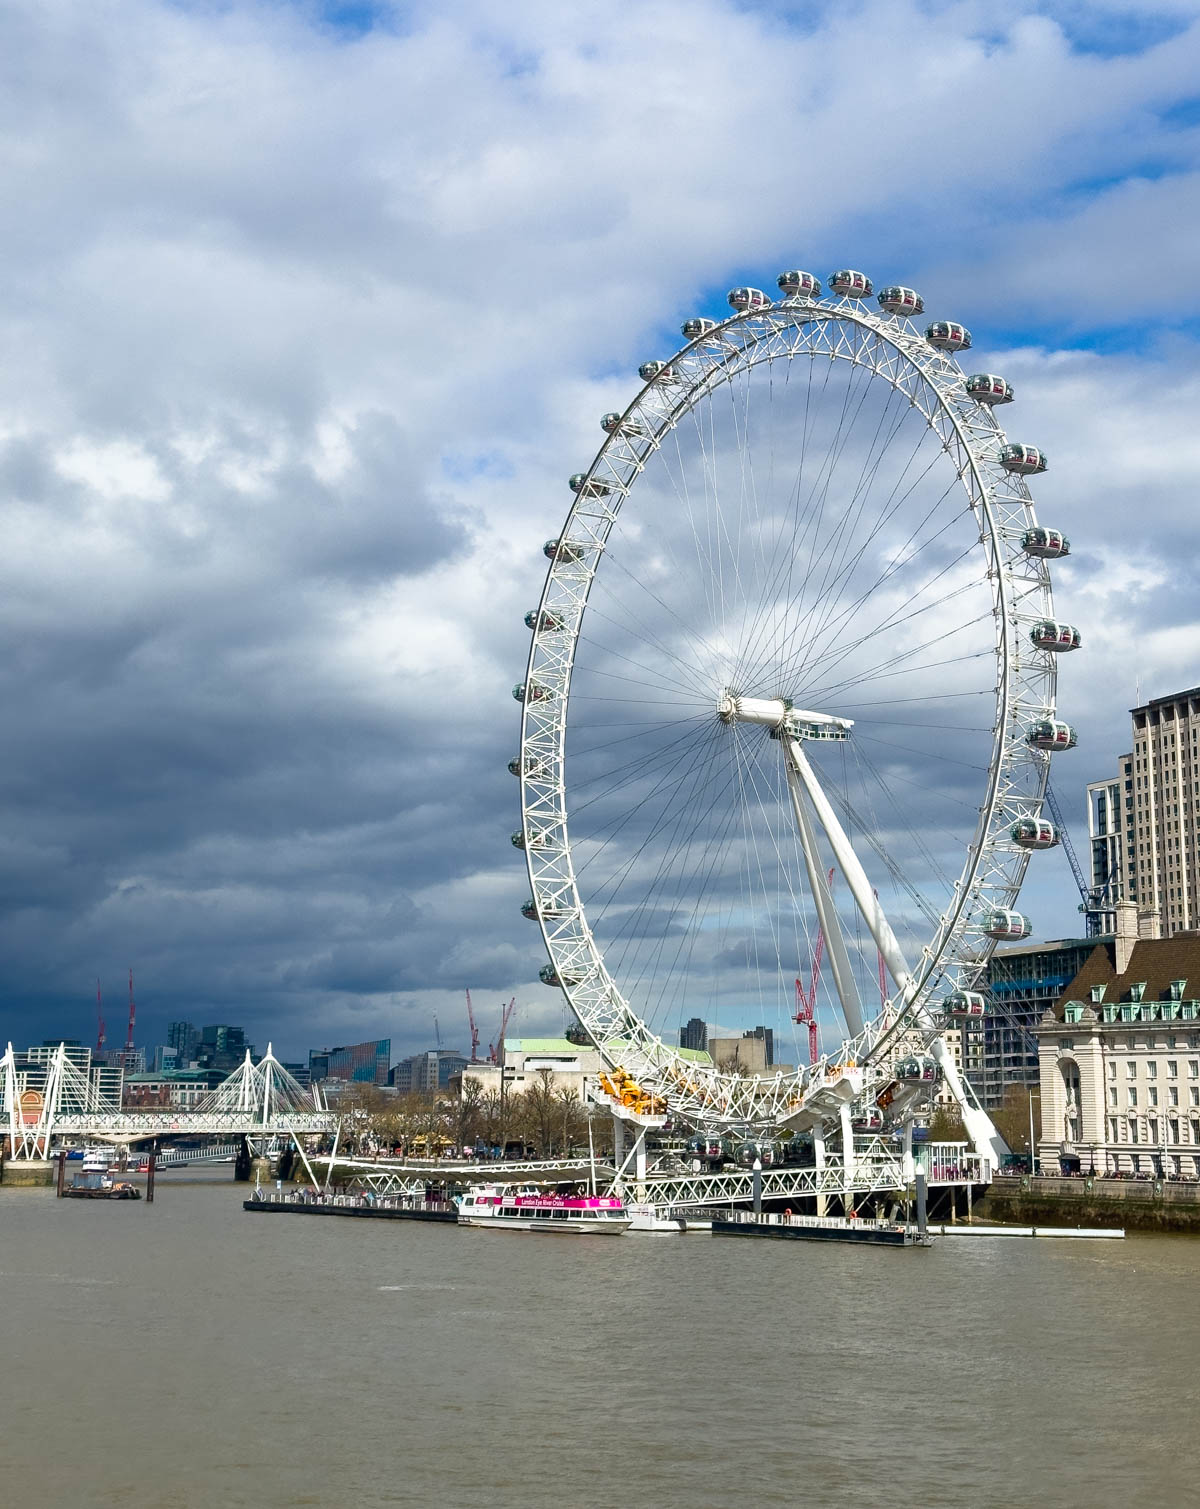 The London Eye ferris wheel on the river. 